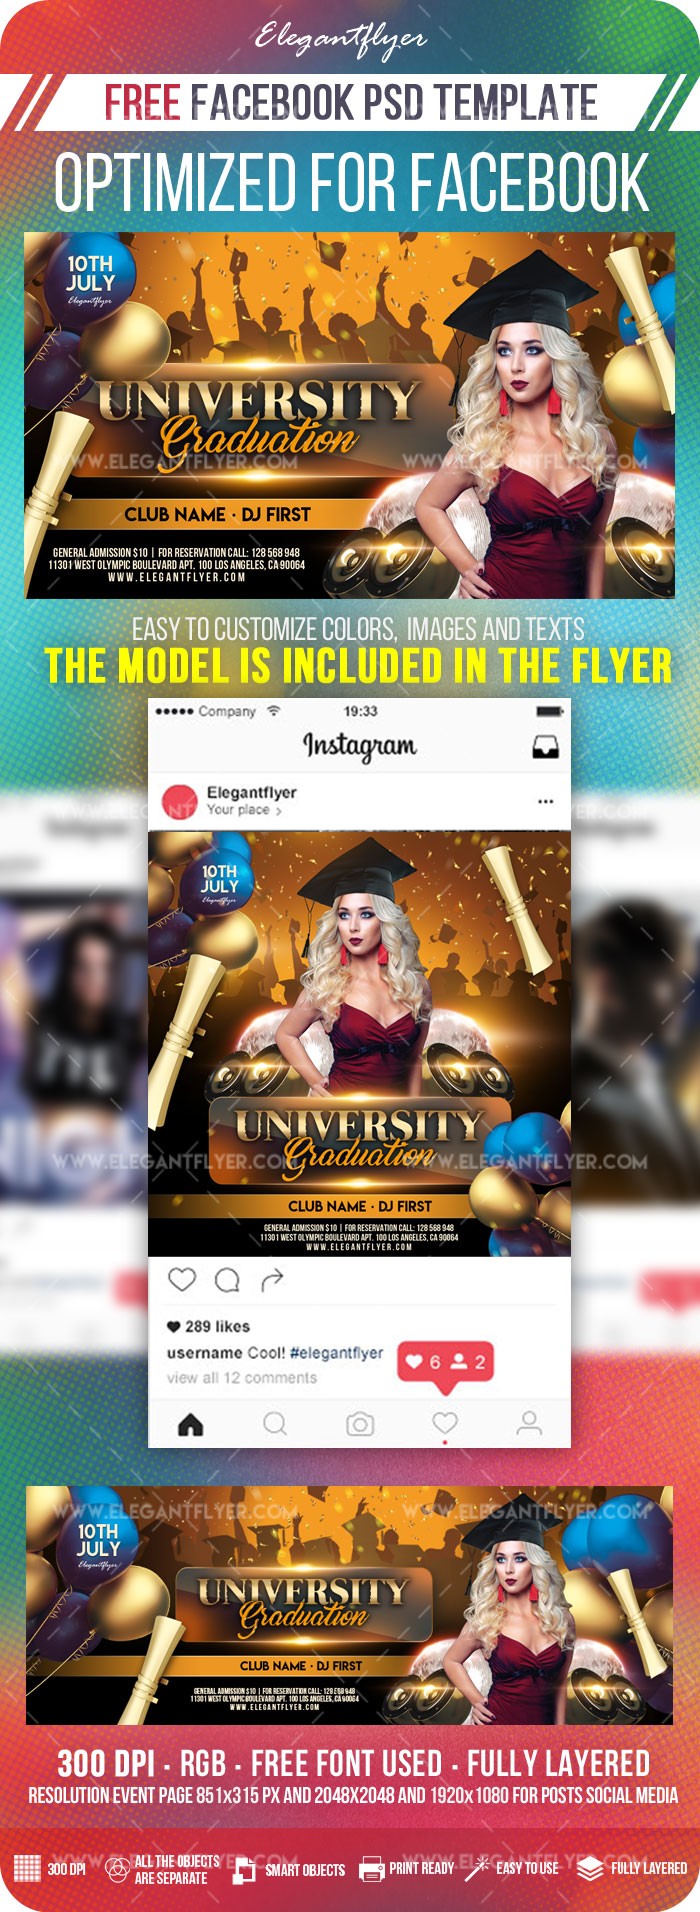 University Graduation Facebook by ElegantFlyer